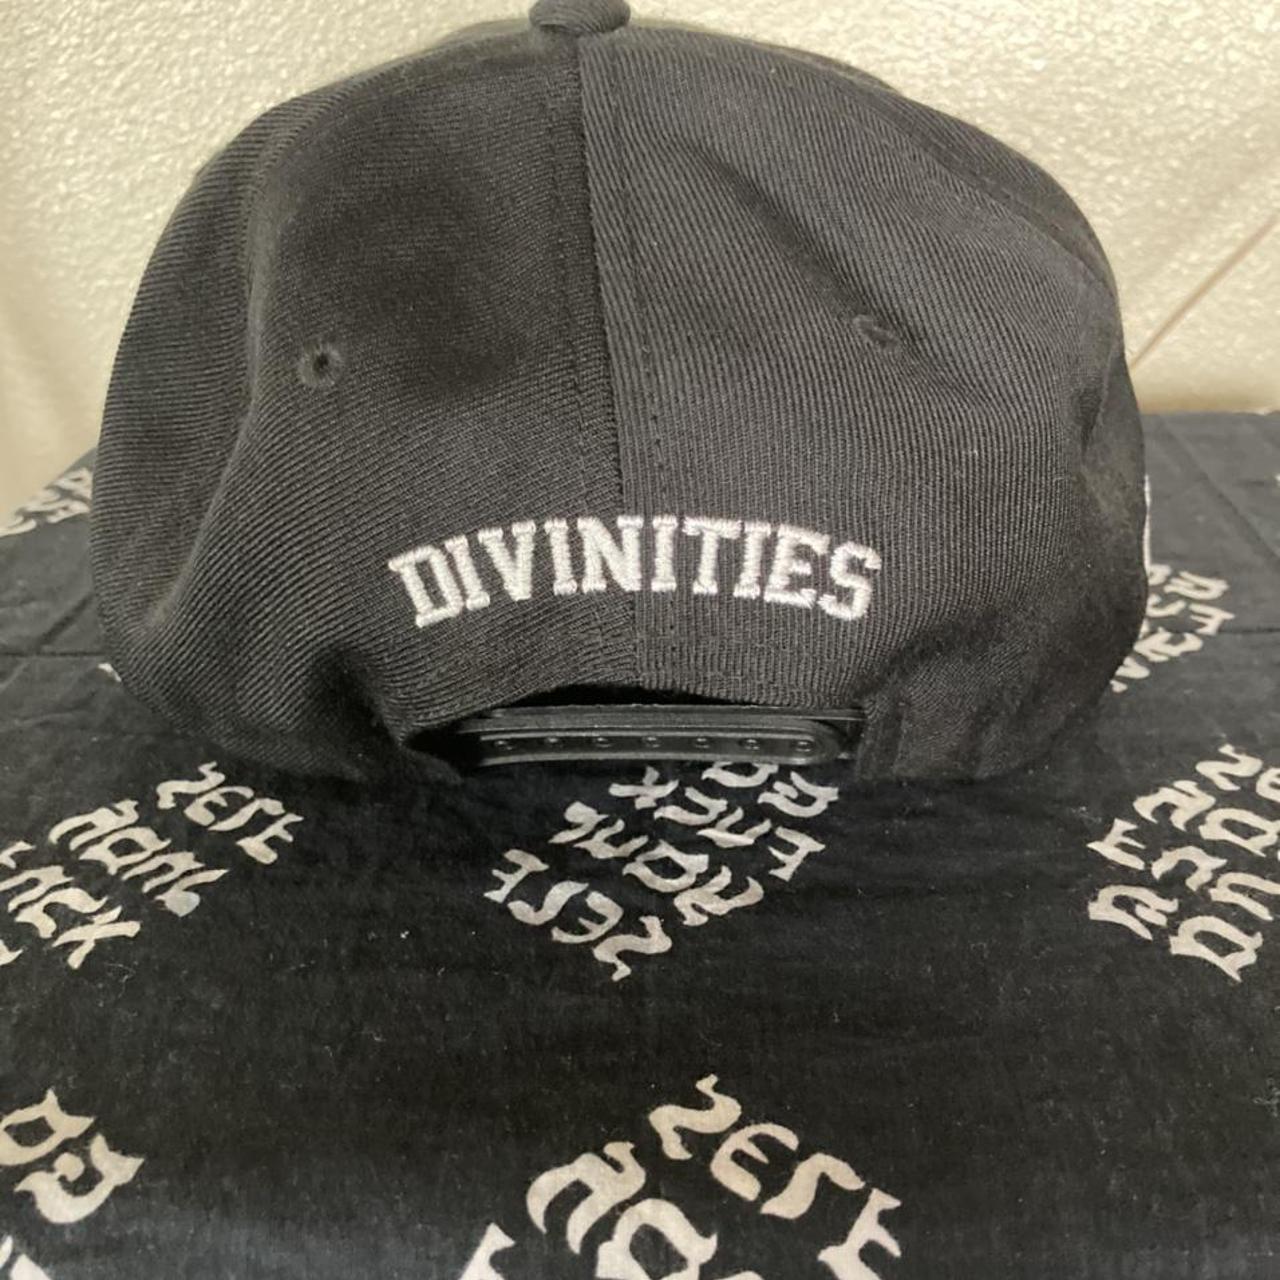 Divinities clothing snapback hat. I’m great... - Depop